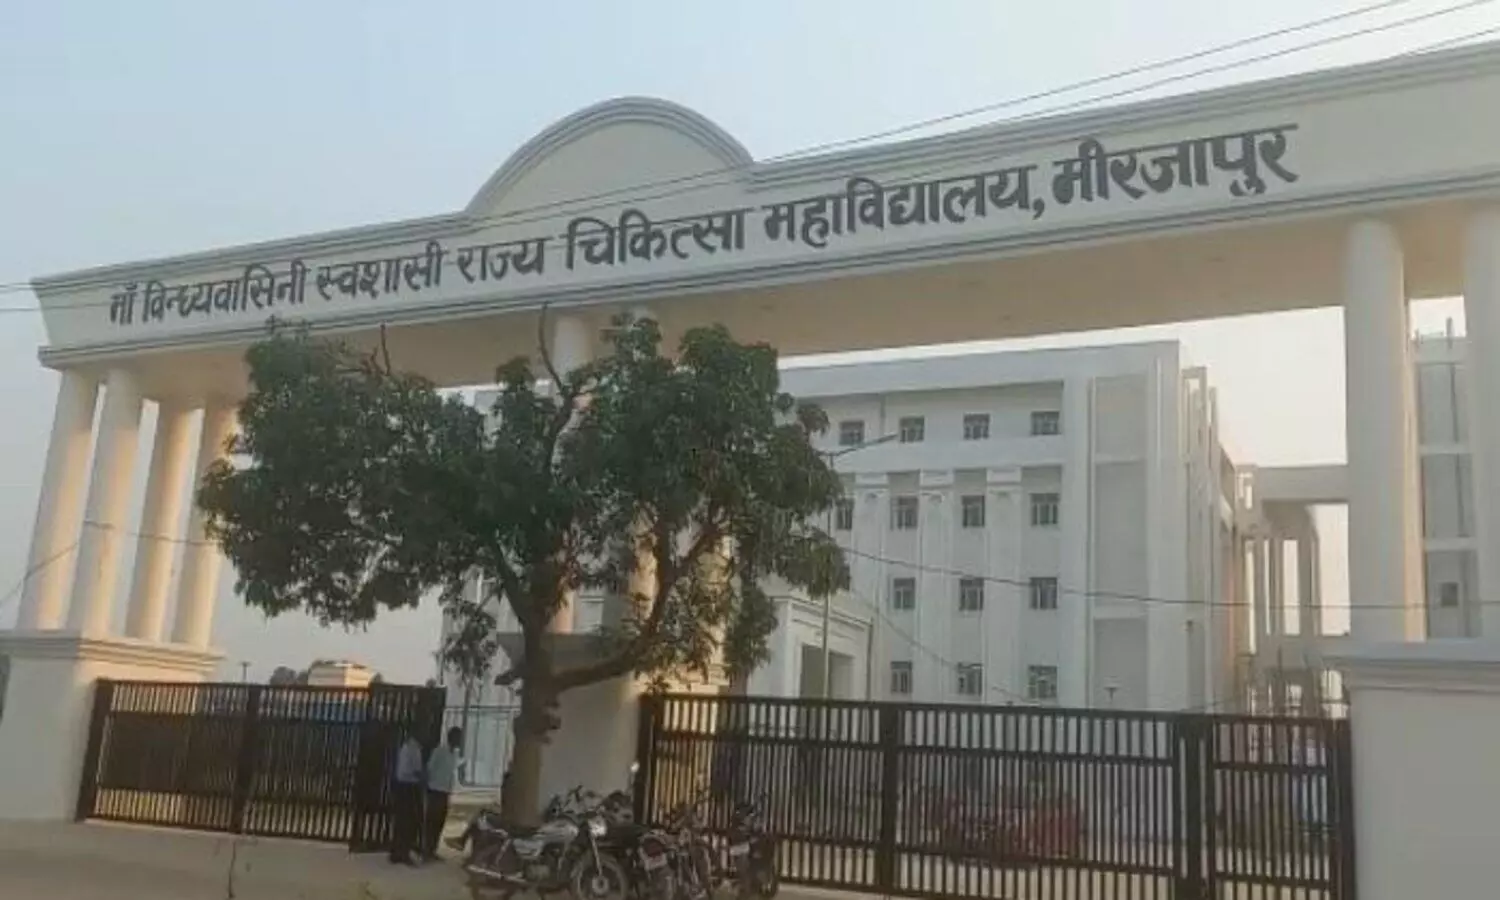 Vindhyavasini Medical College